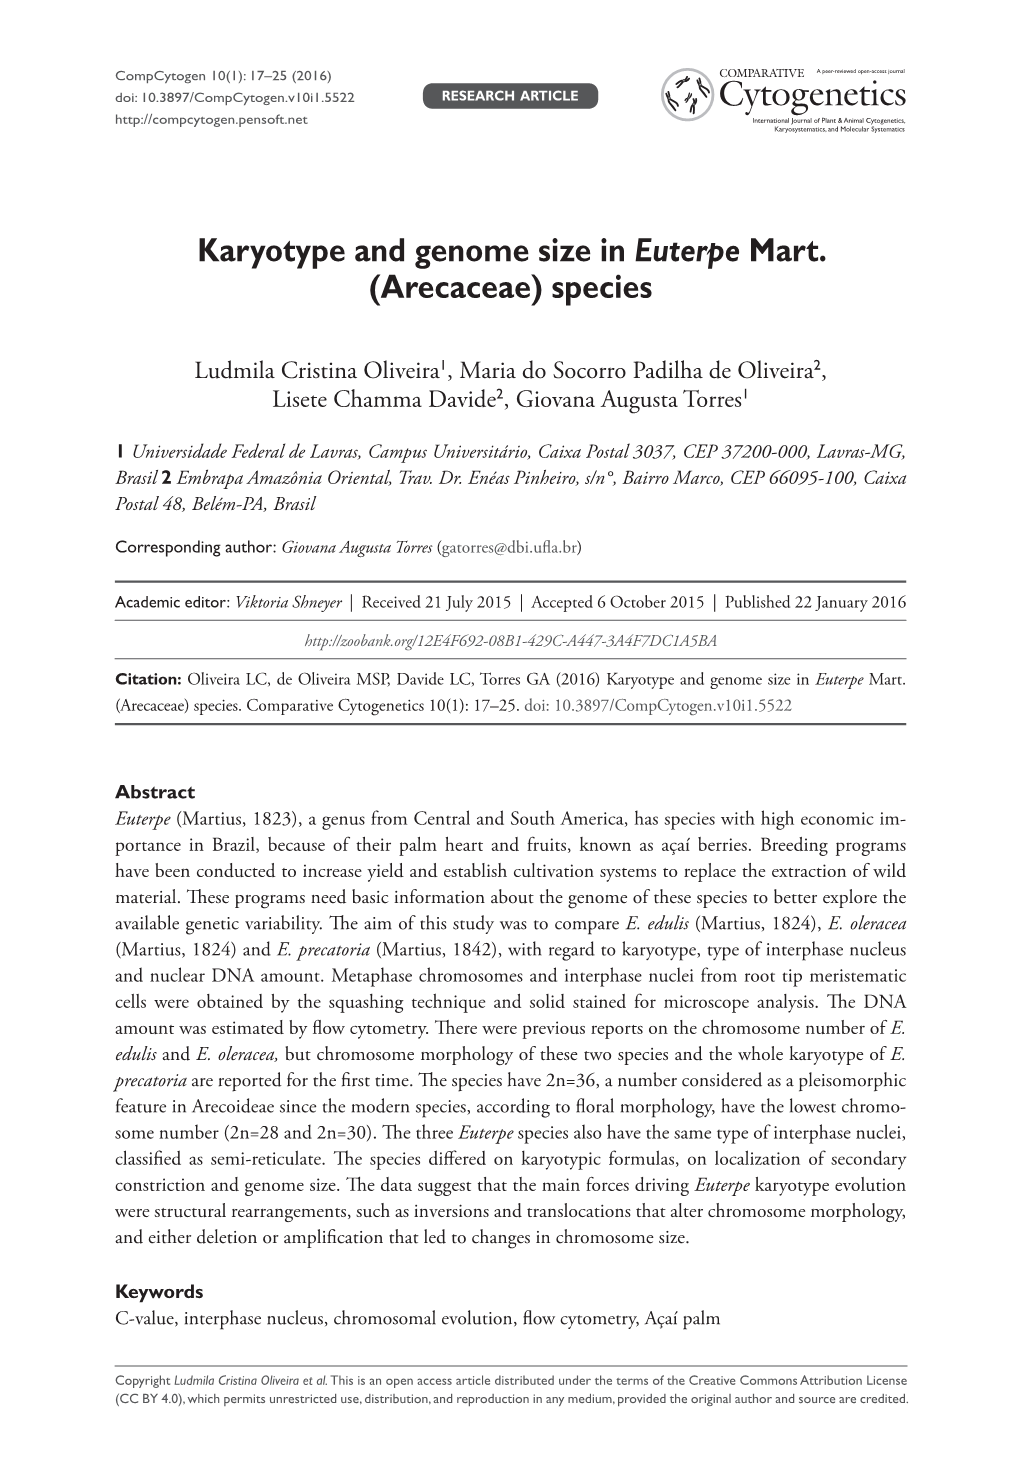 ﻿Karyotype and Genome Size in Euterpe Mart. (Arecaceae) Species